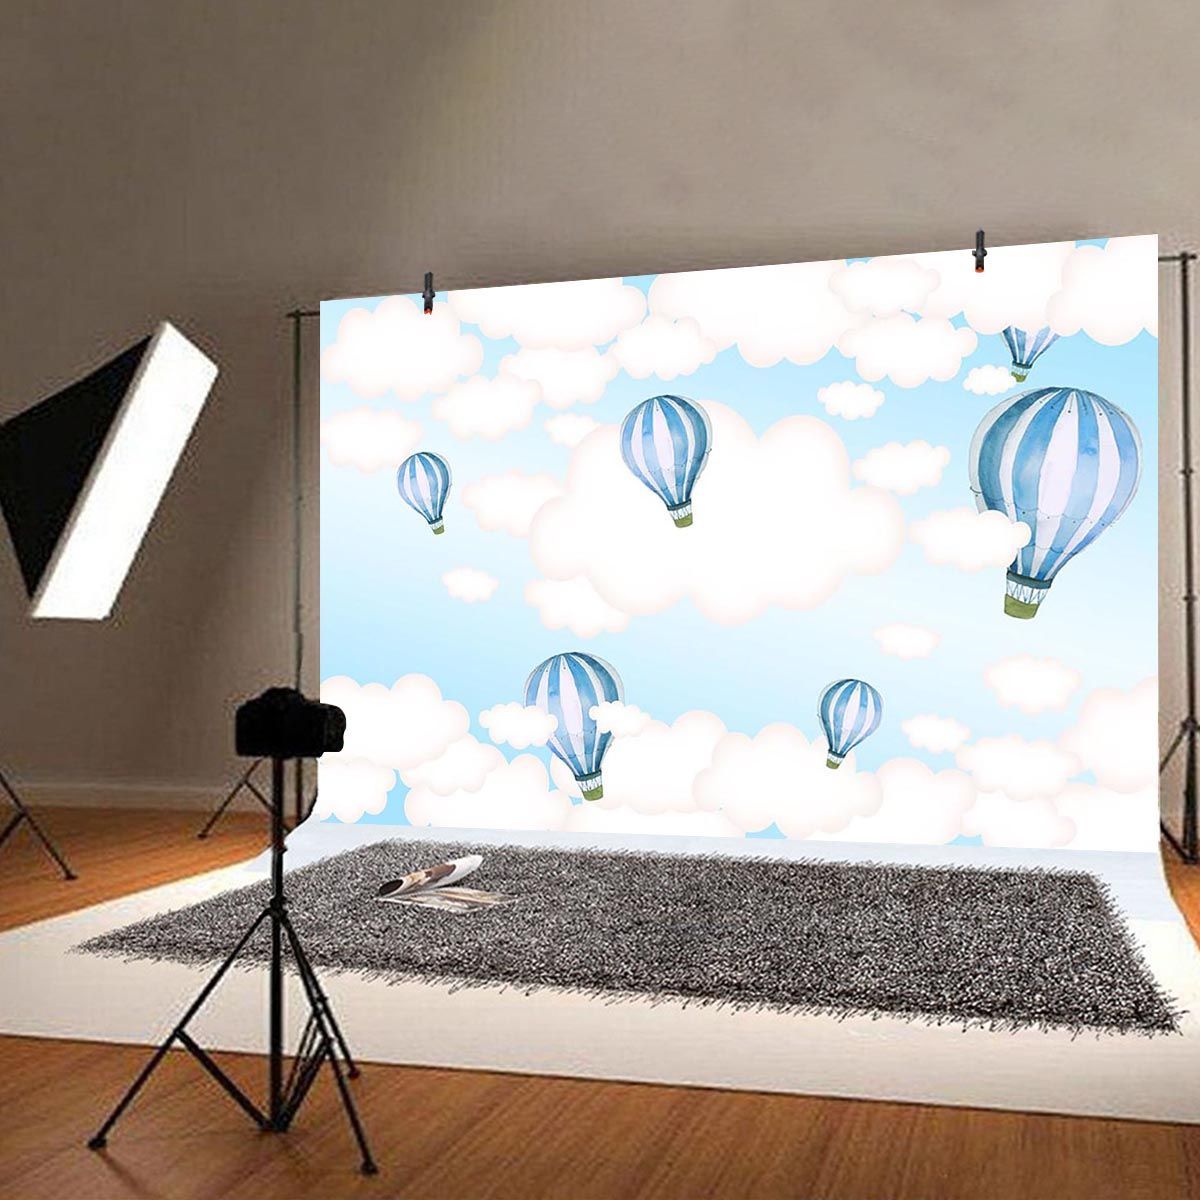 5x3FT-7x5FT-9x6FT-Sky-White-Cloud-Balloon-Photography-Backdrop-Background-Studio-Prop---09x15m-1618189